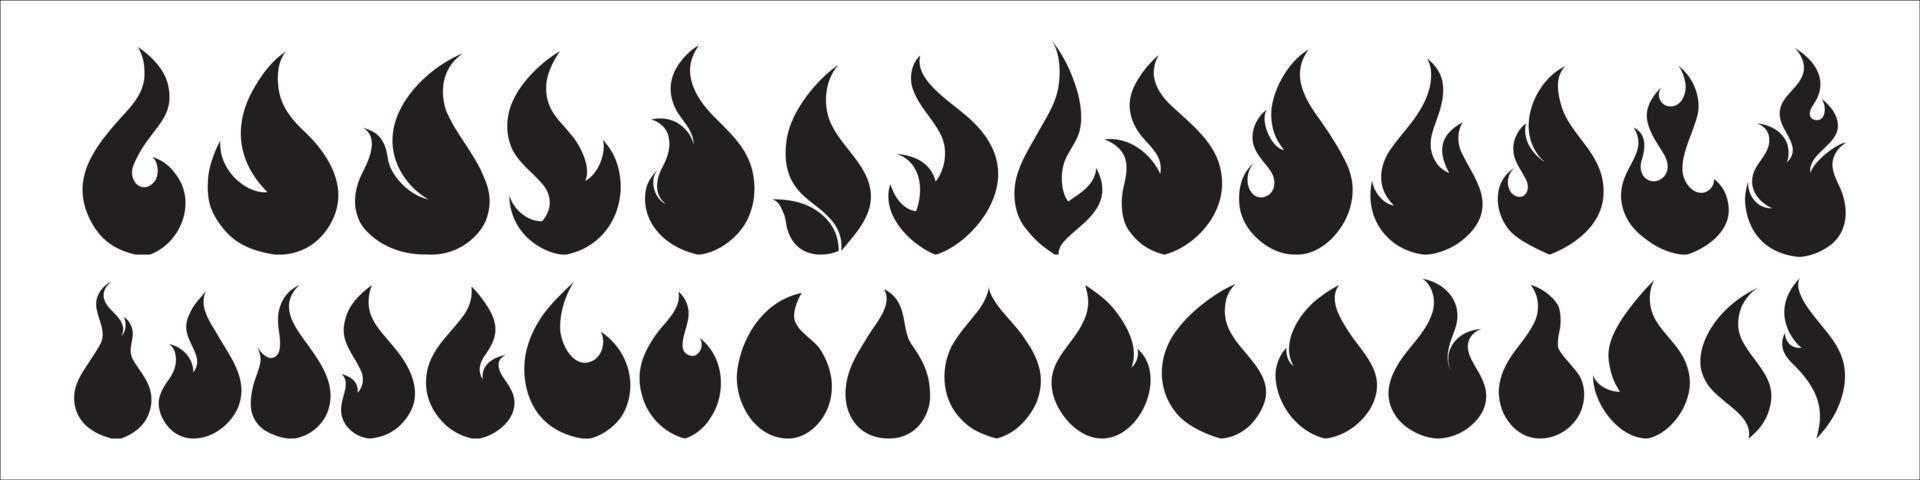 vuur vlam icon set symbool van vuur vector